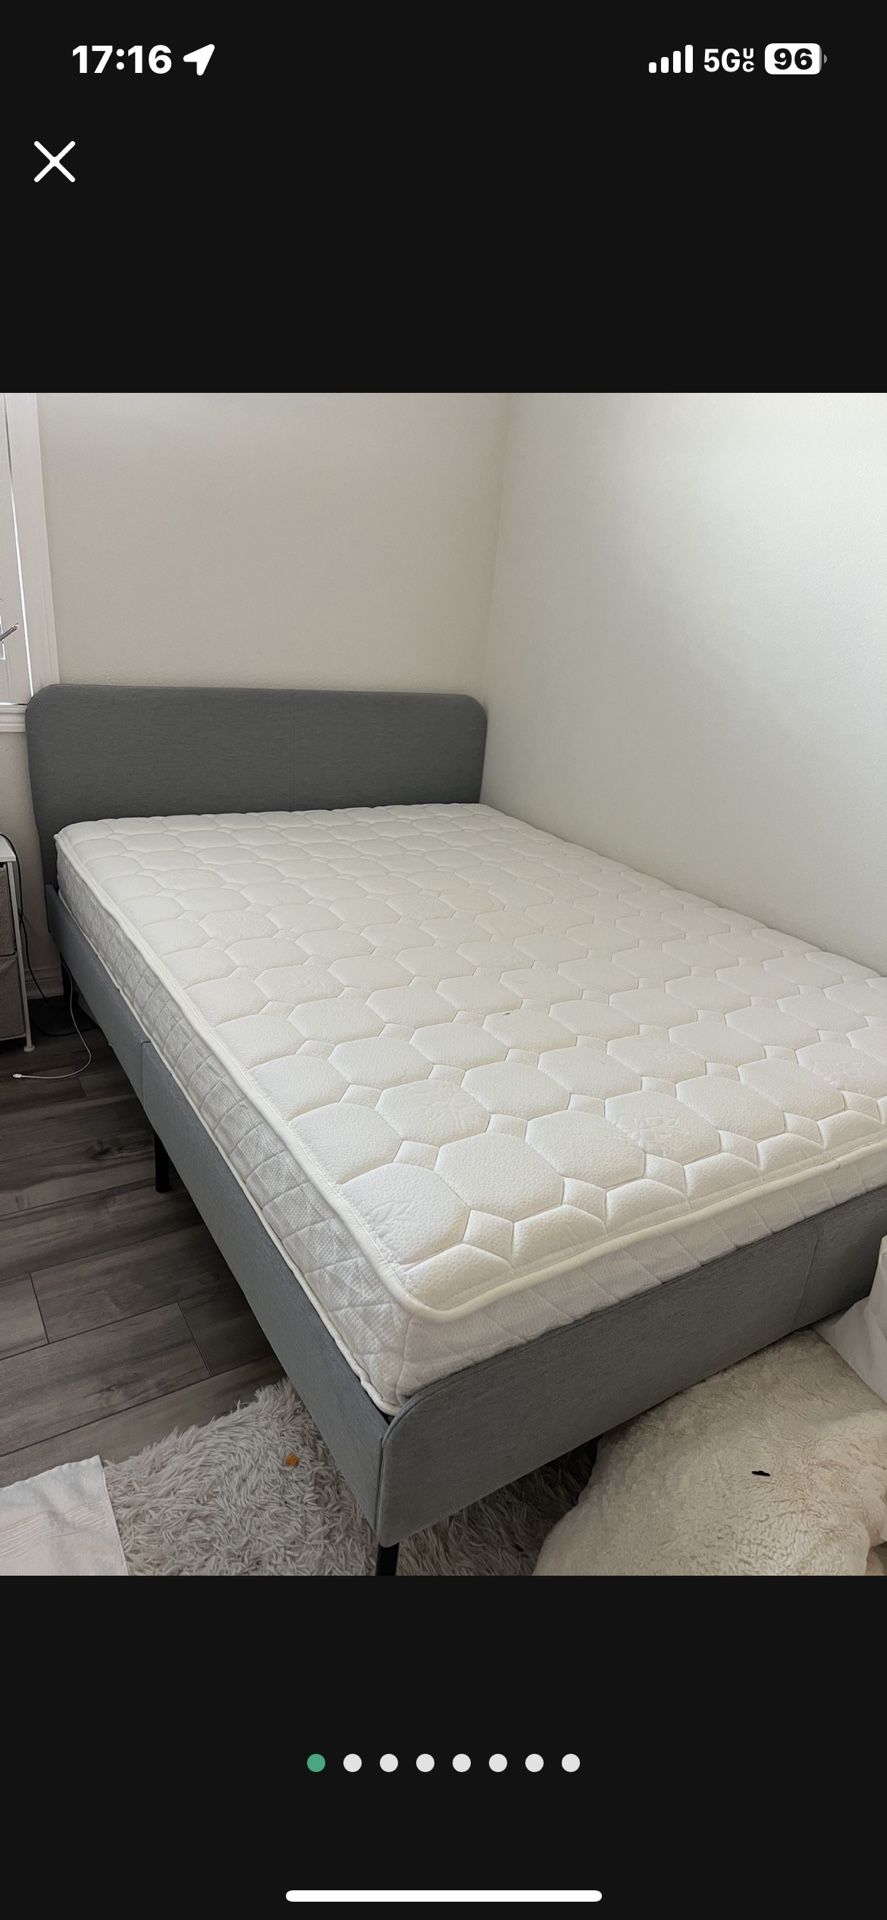 IKEA Full Size Bed Frame